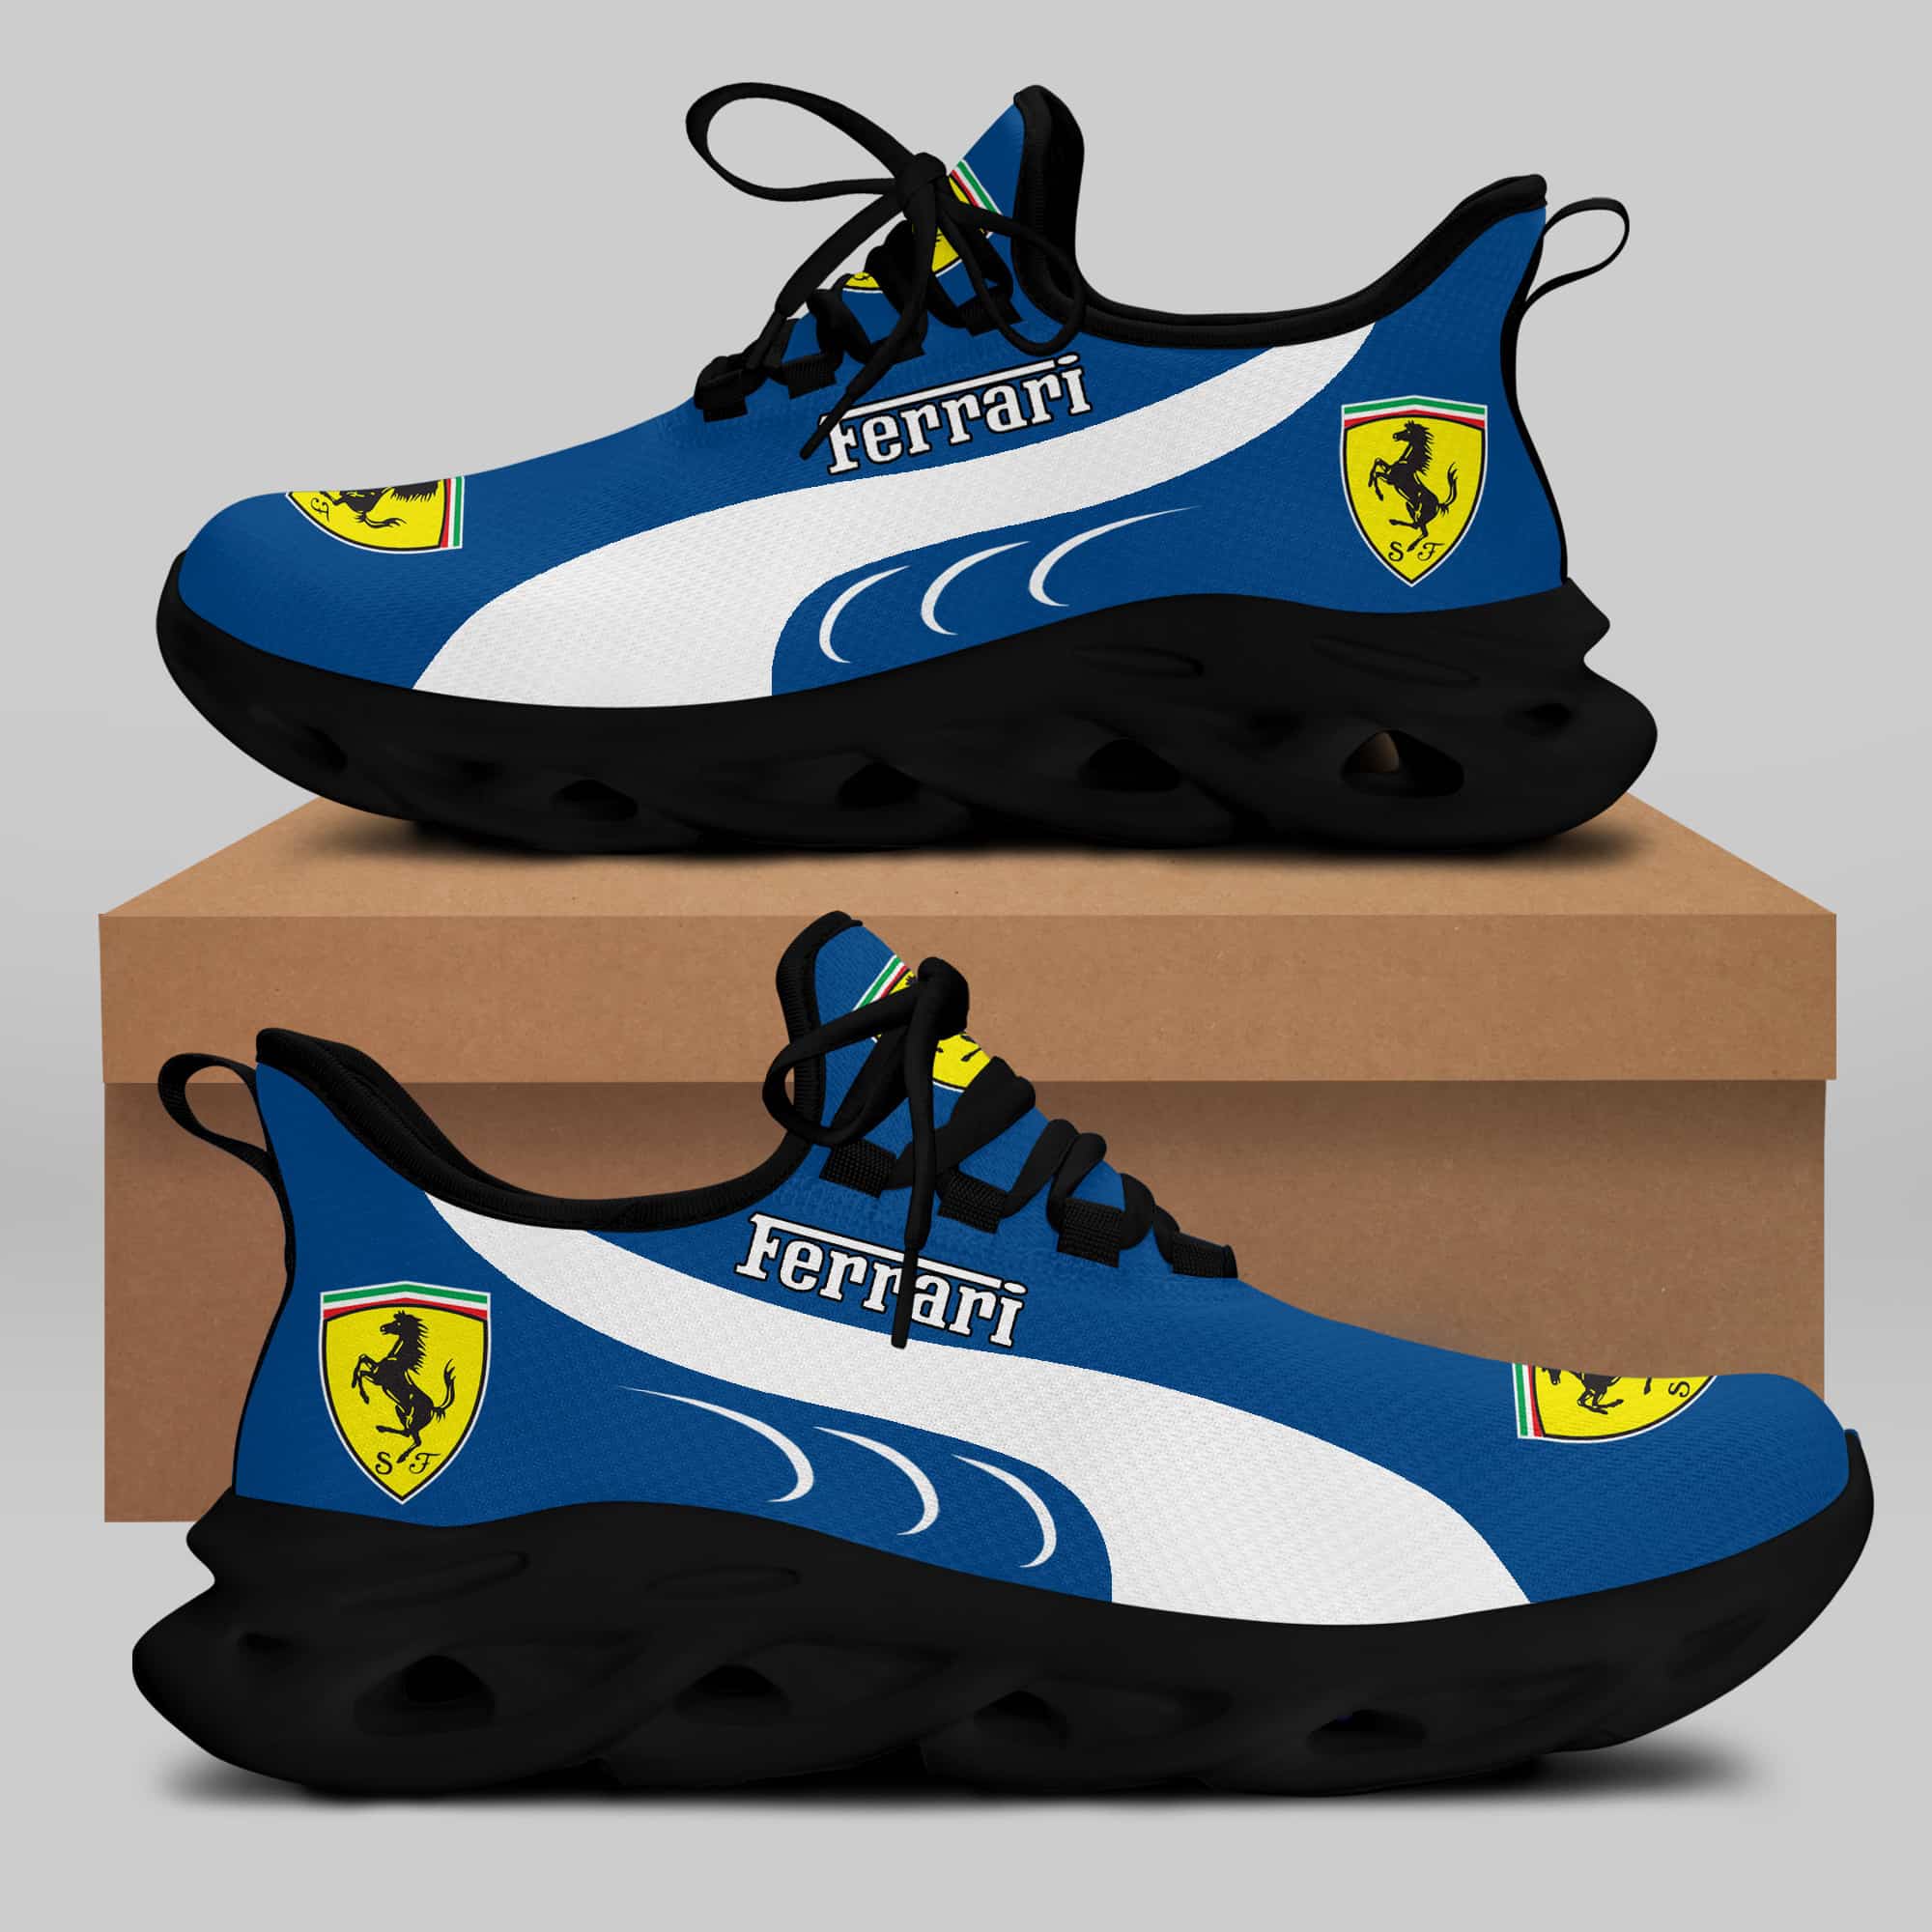 Ferrari Sneaker Running Shoes Max Soul Shoes Sneakers Ver 4 1